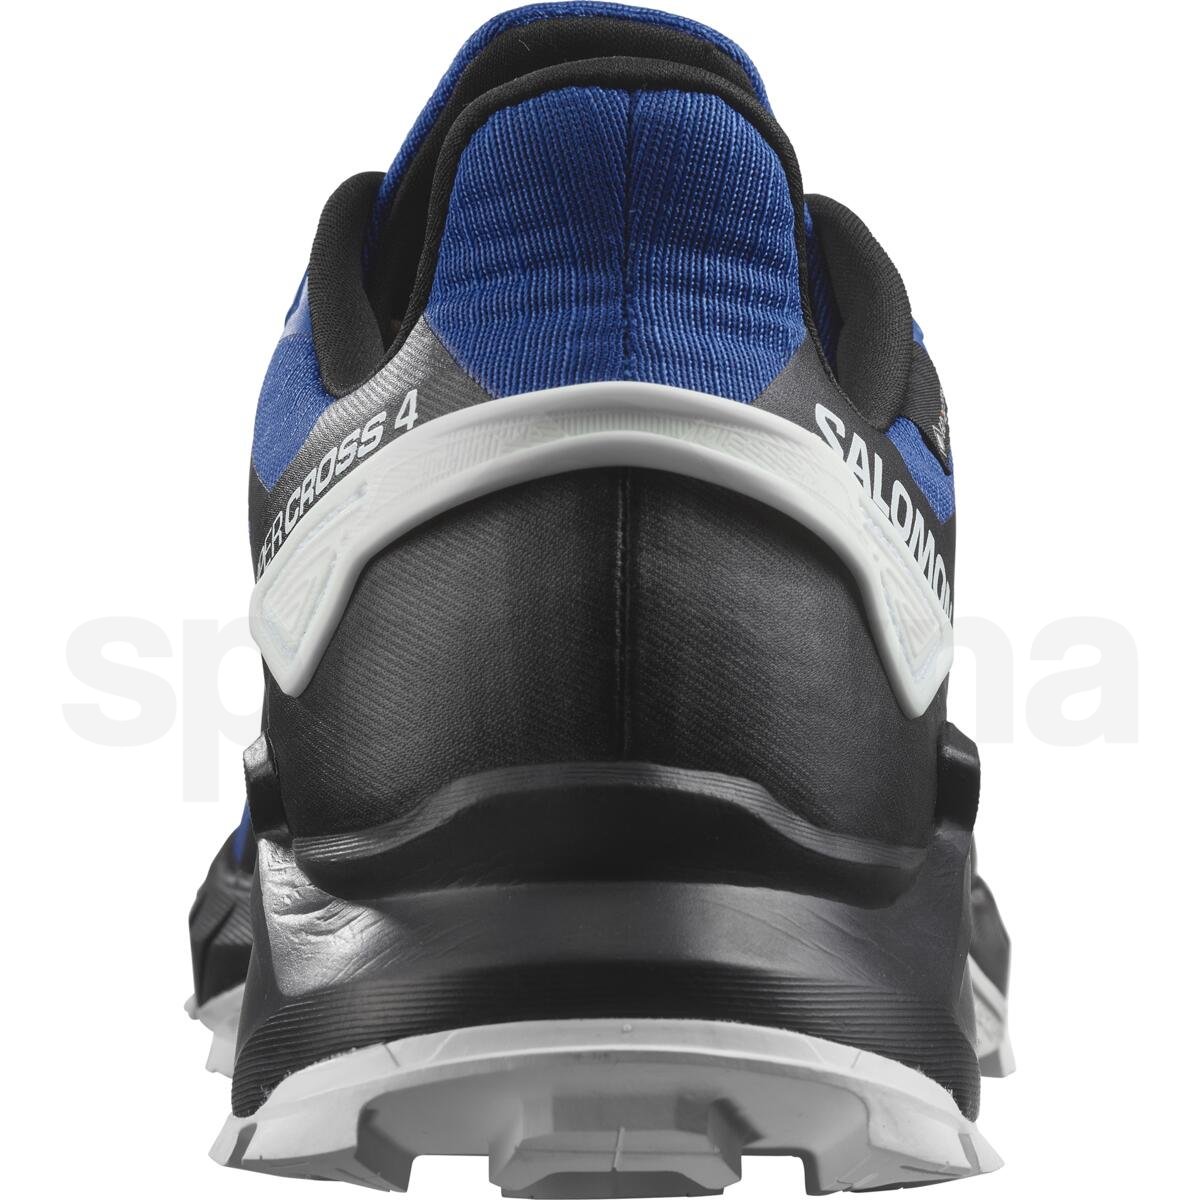 Obuv Salomon Supercross 4 GTX M - modrá/černá